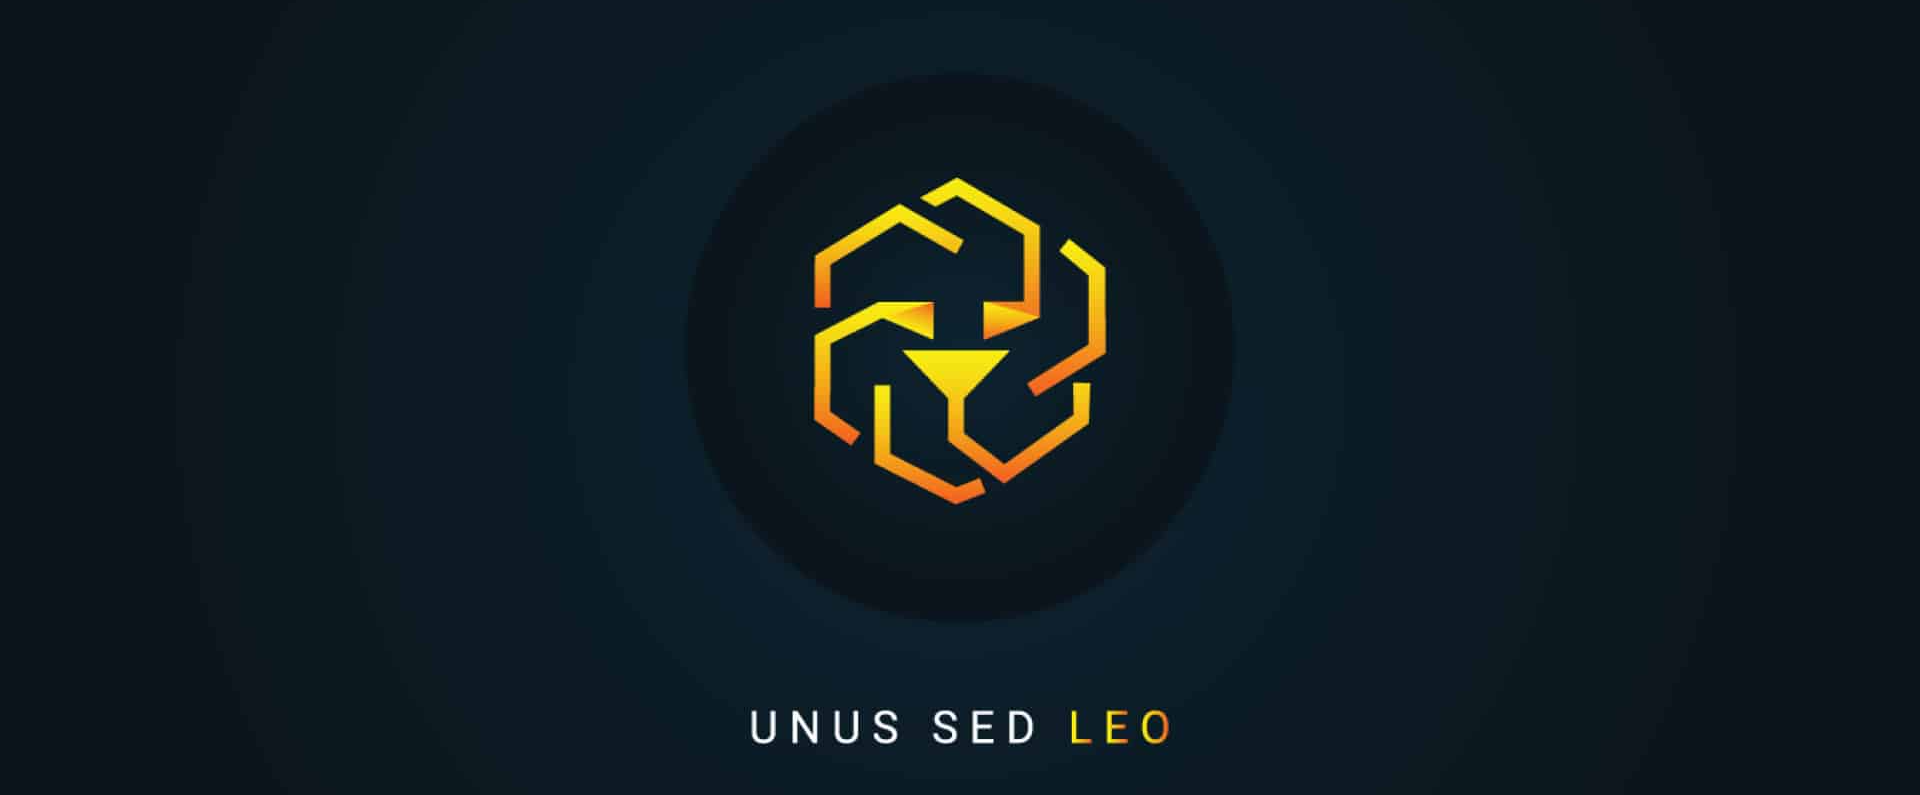 Що таке криптовалюта UNUS SED LEO?